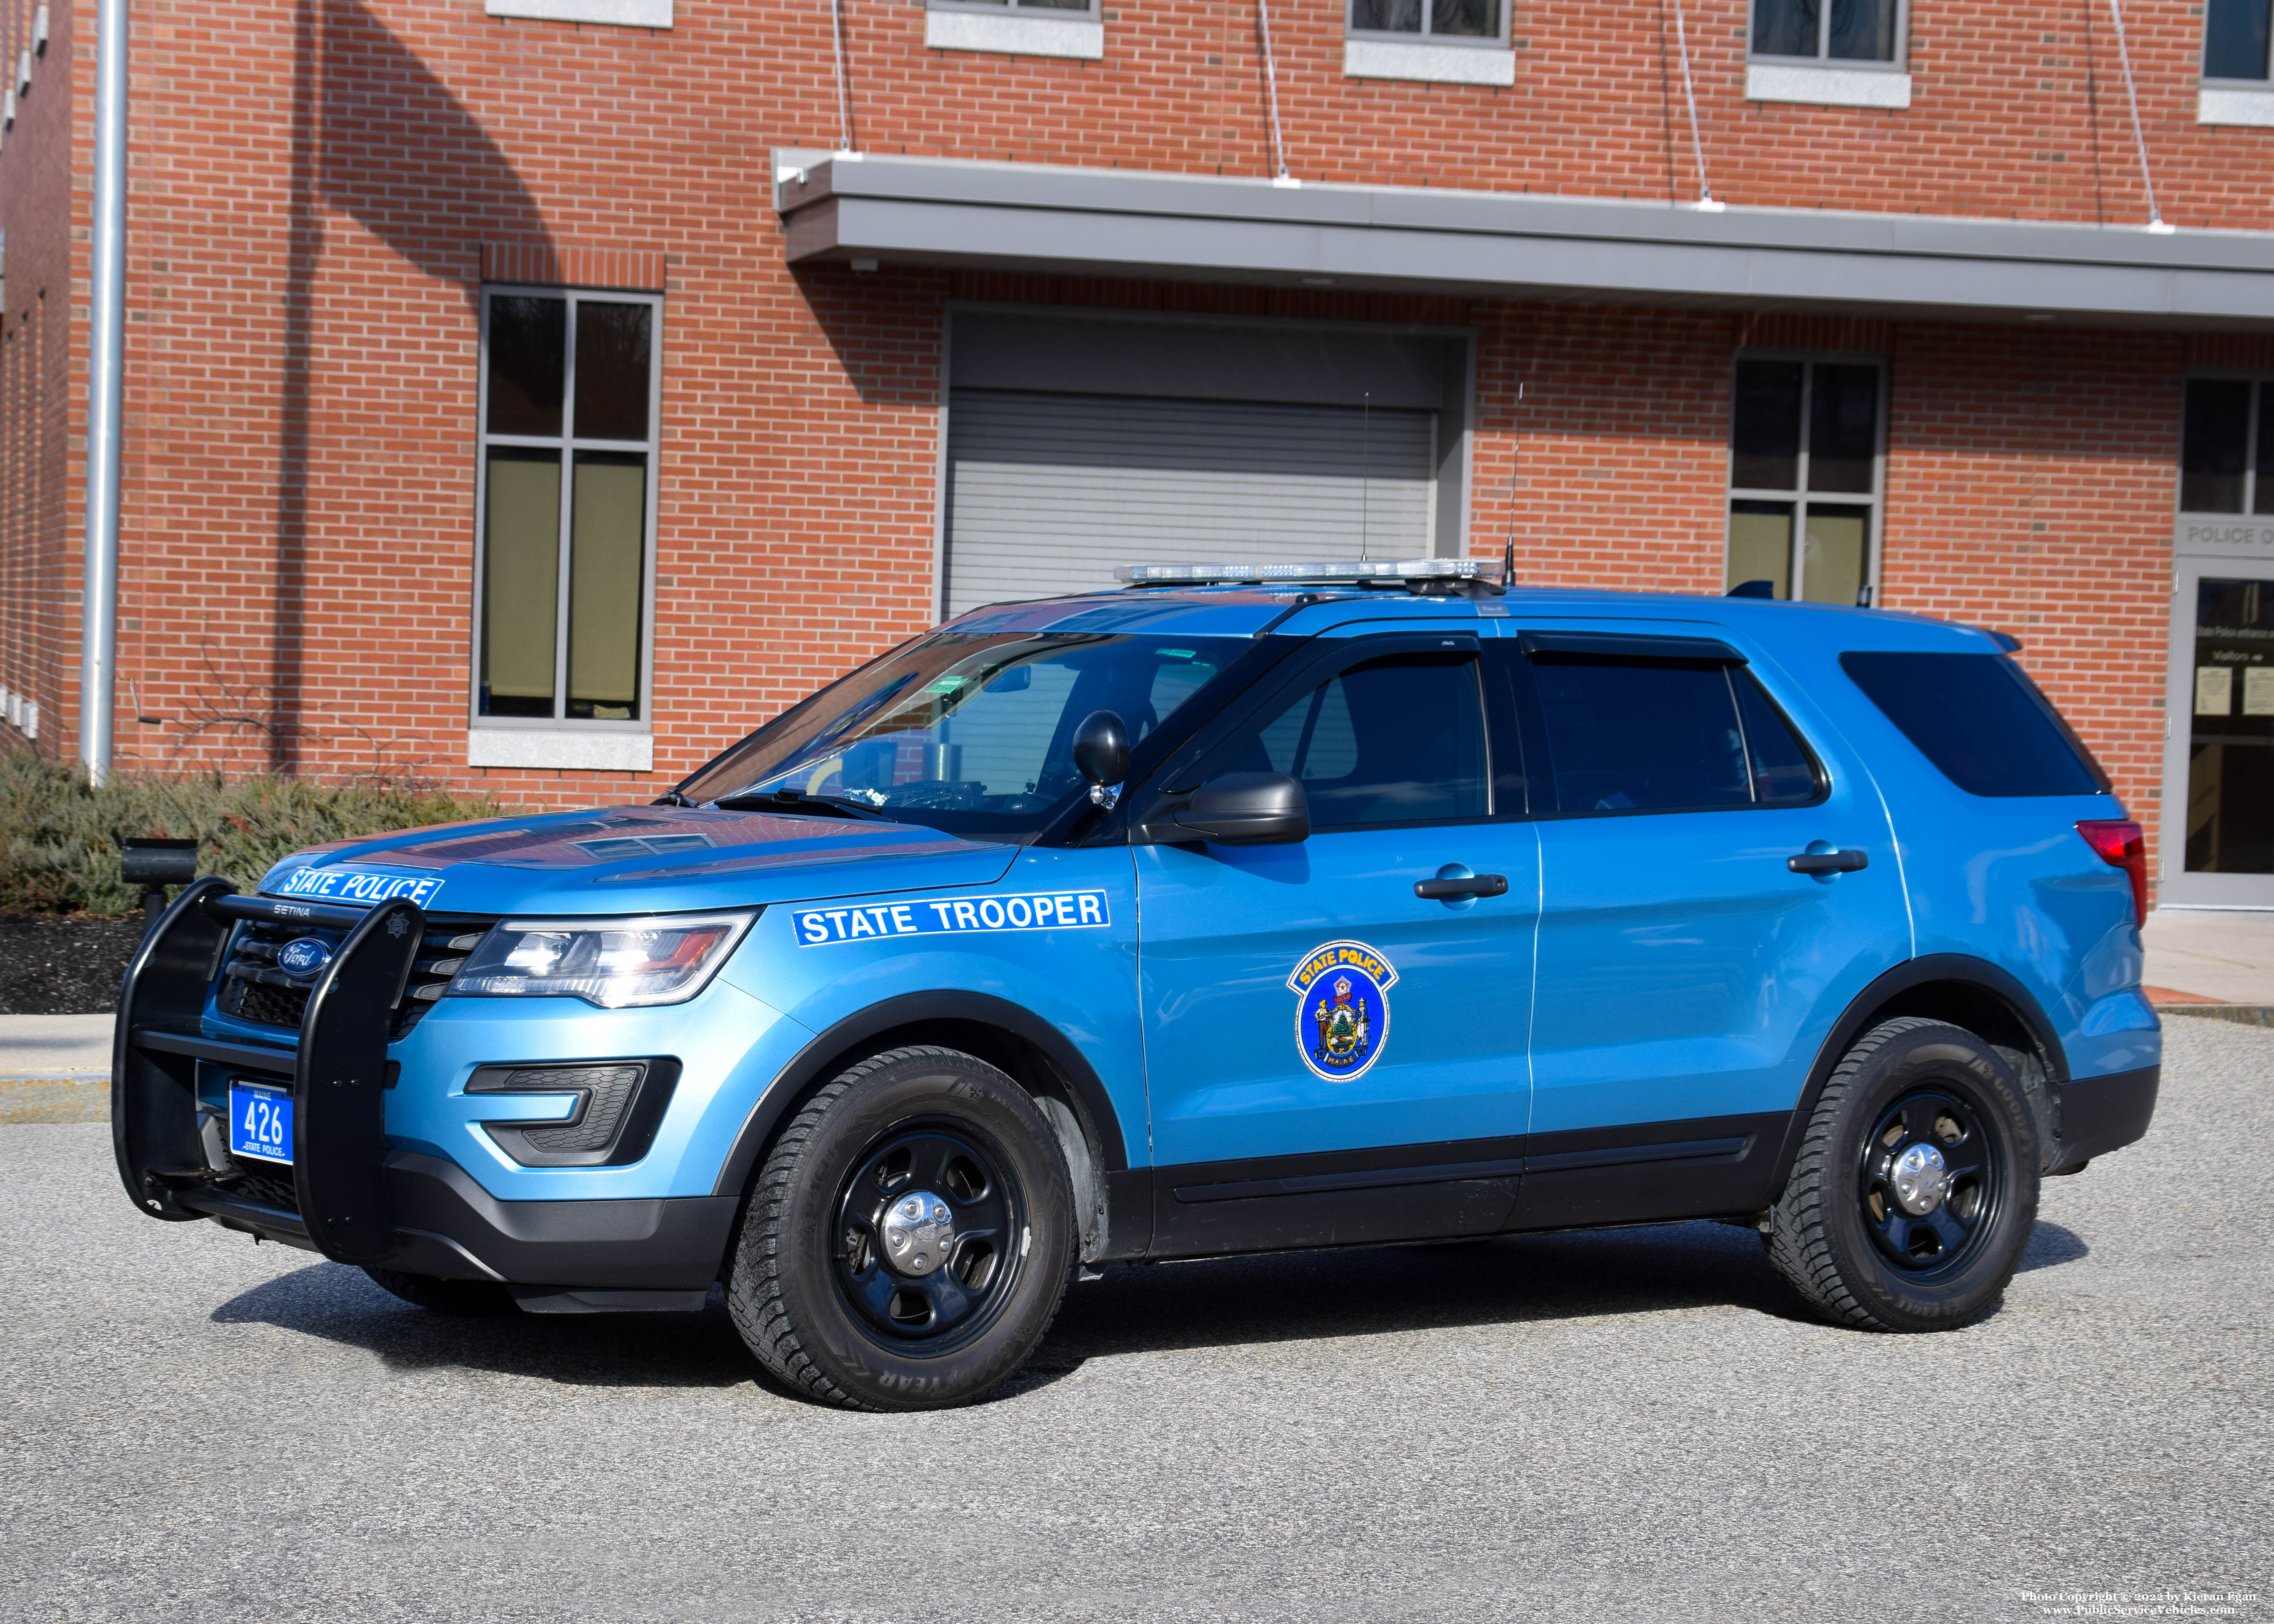 A photo  of Maine State Police
            Cruiser 426, a 2018 Ford Police Interceptor Utility             taken by Kieran Egan